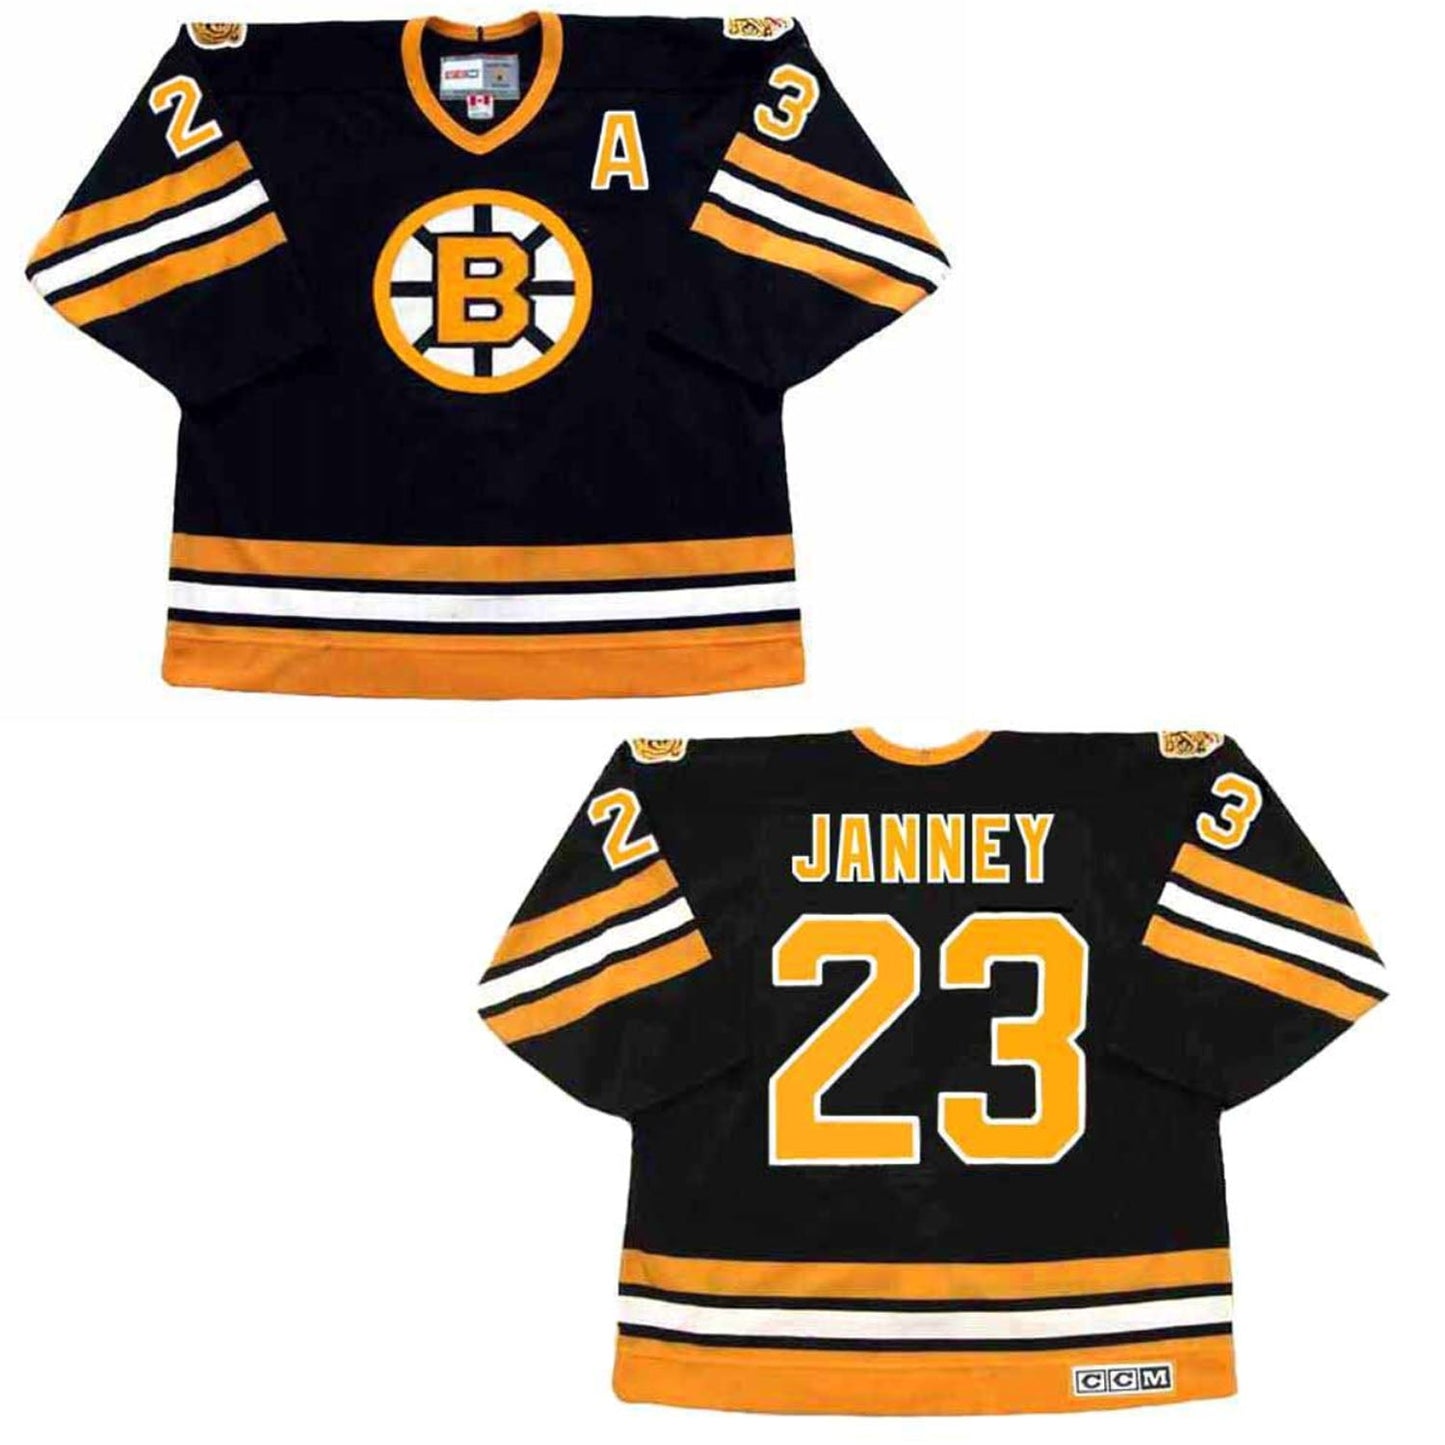 NHL Craig Janney Boston Bruins 23 Jersey